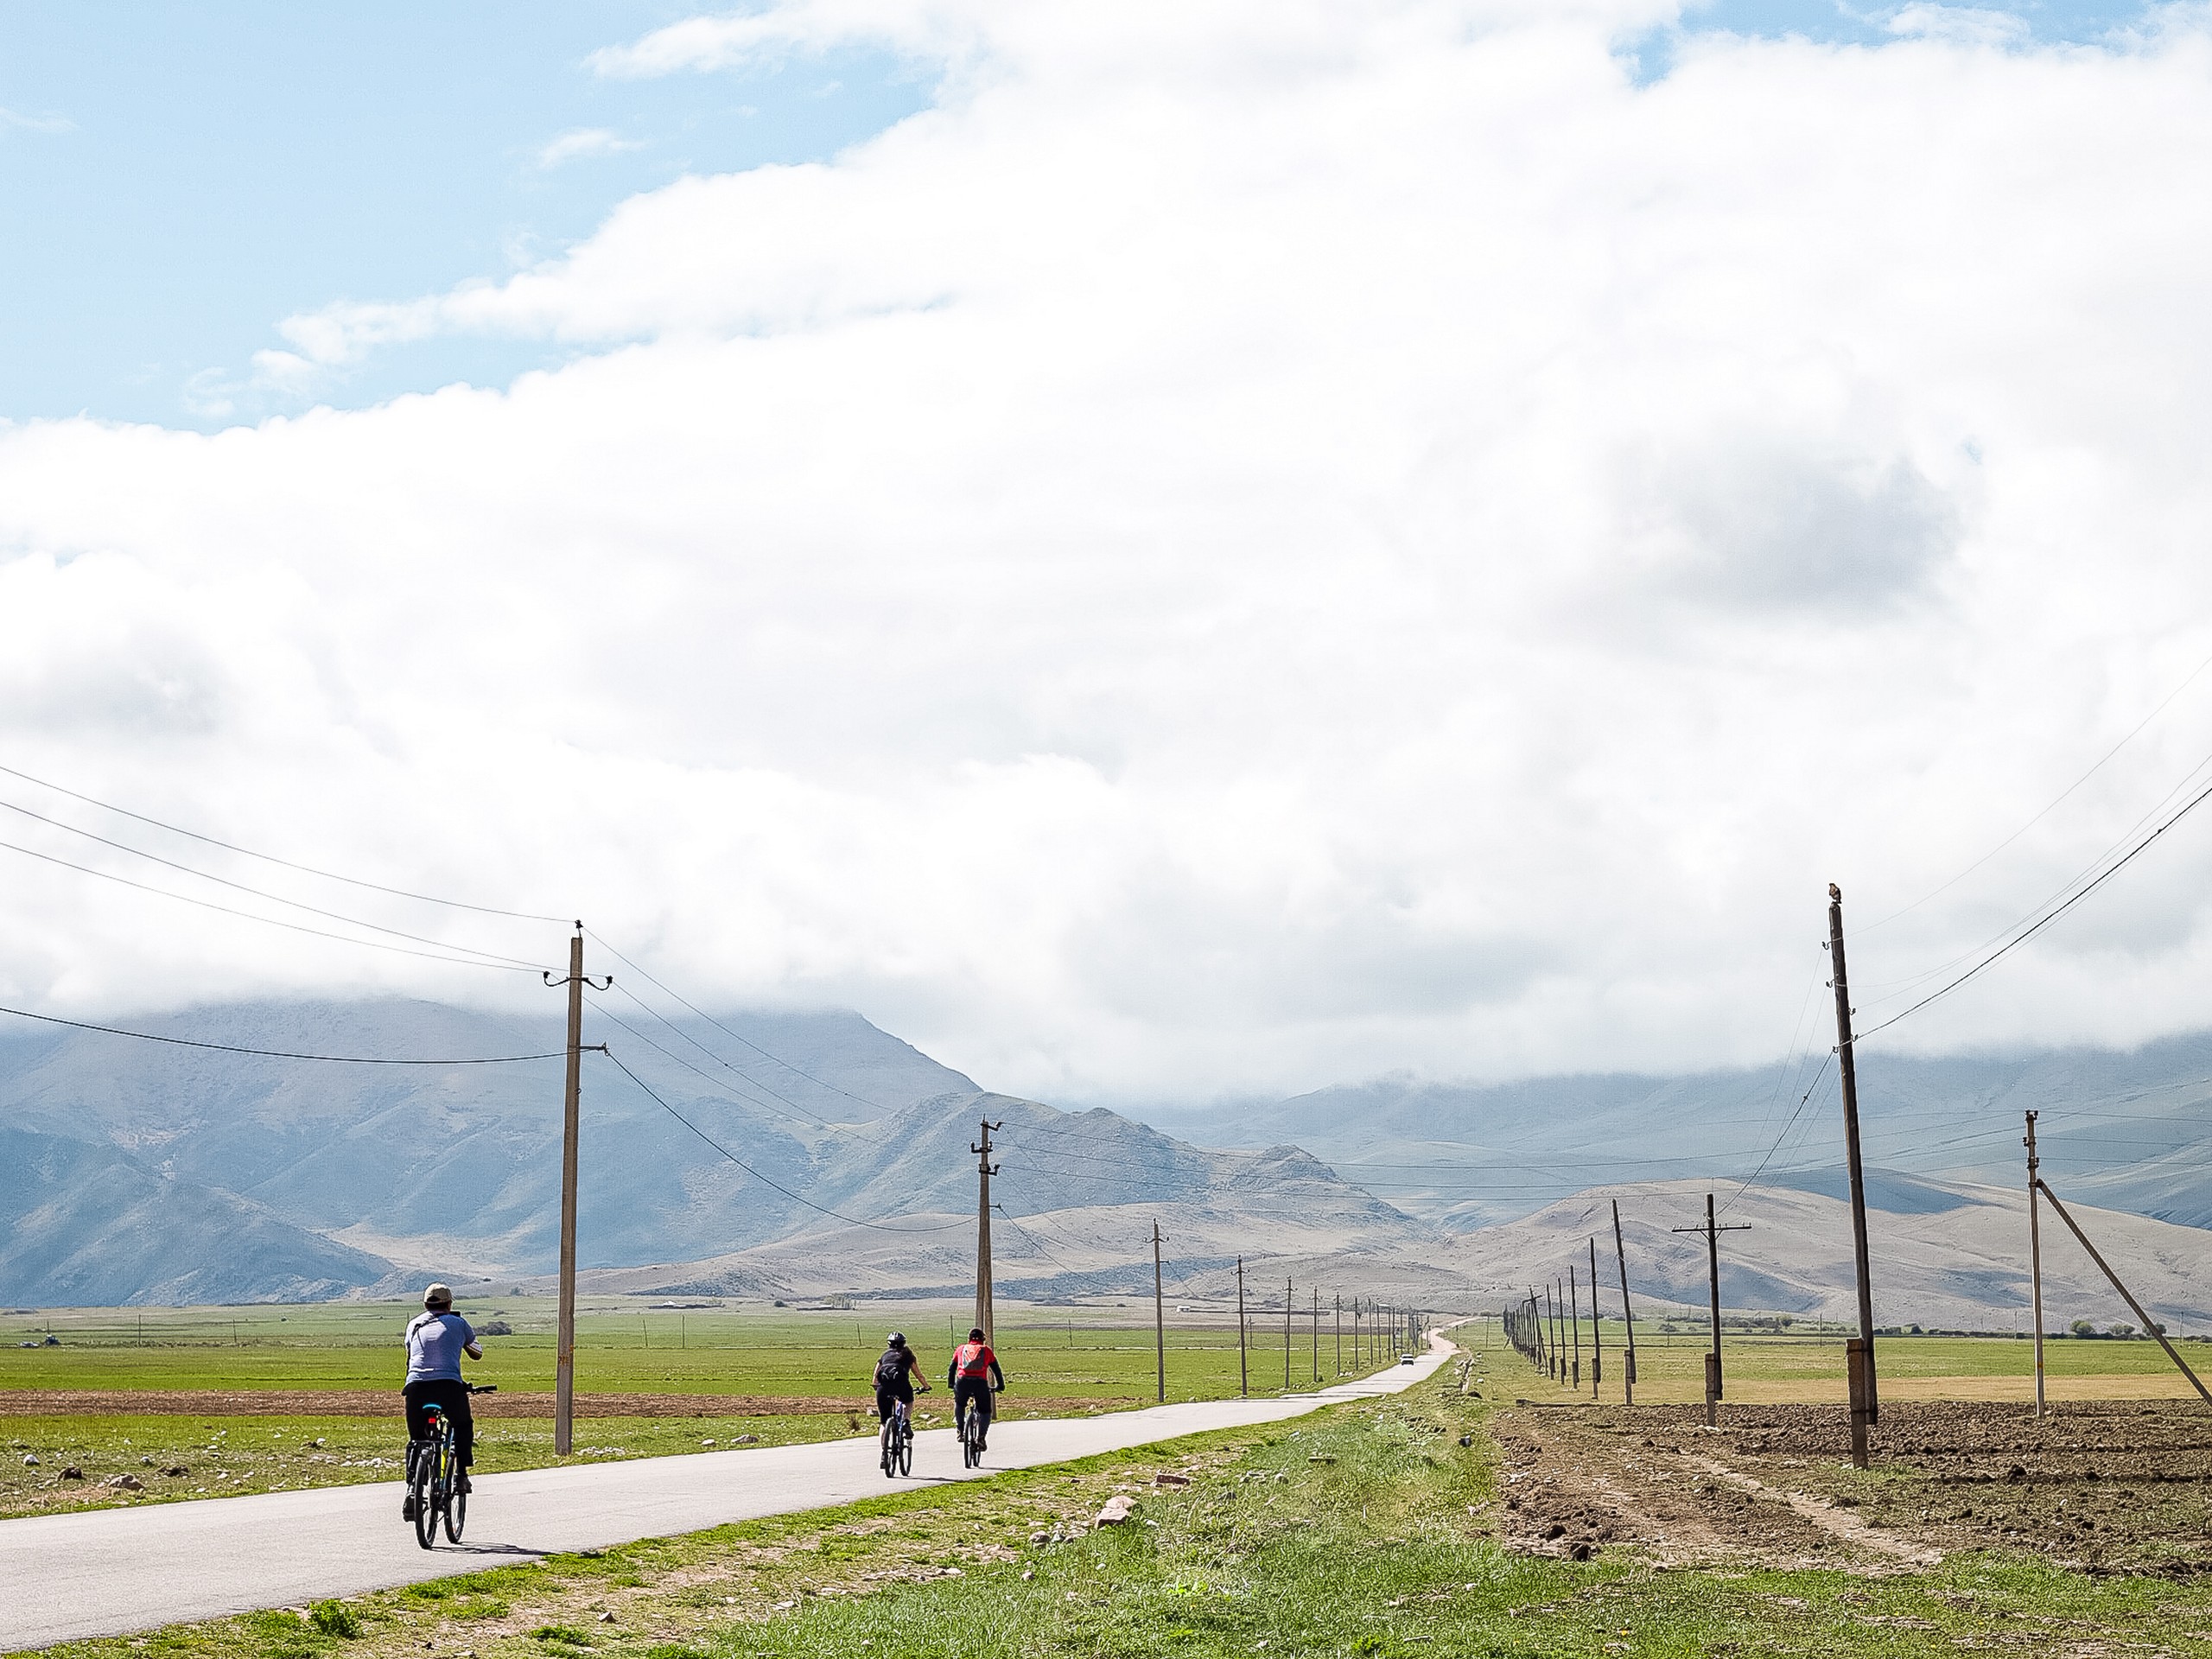 Biking on the roads of Northern Kyrgyzstan